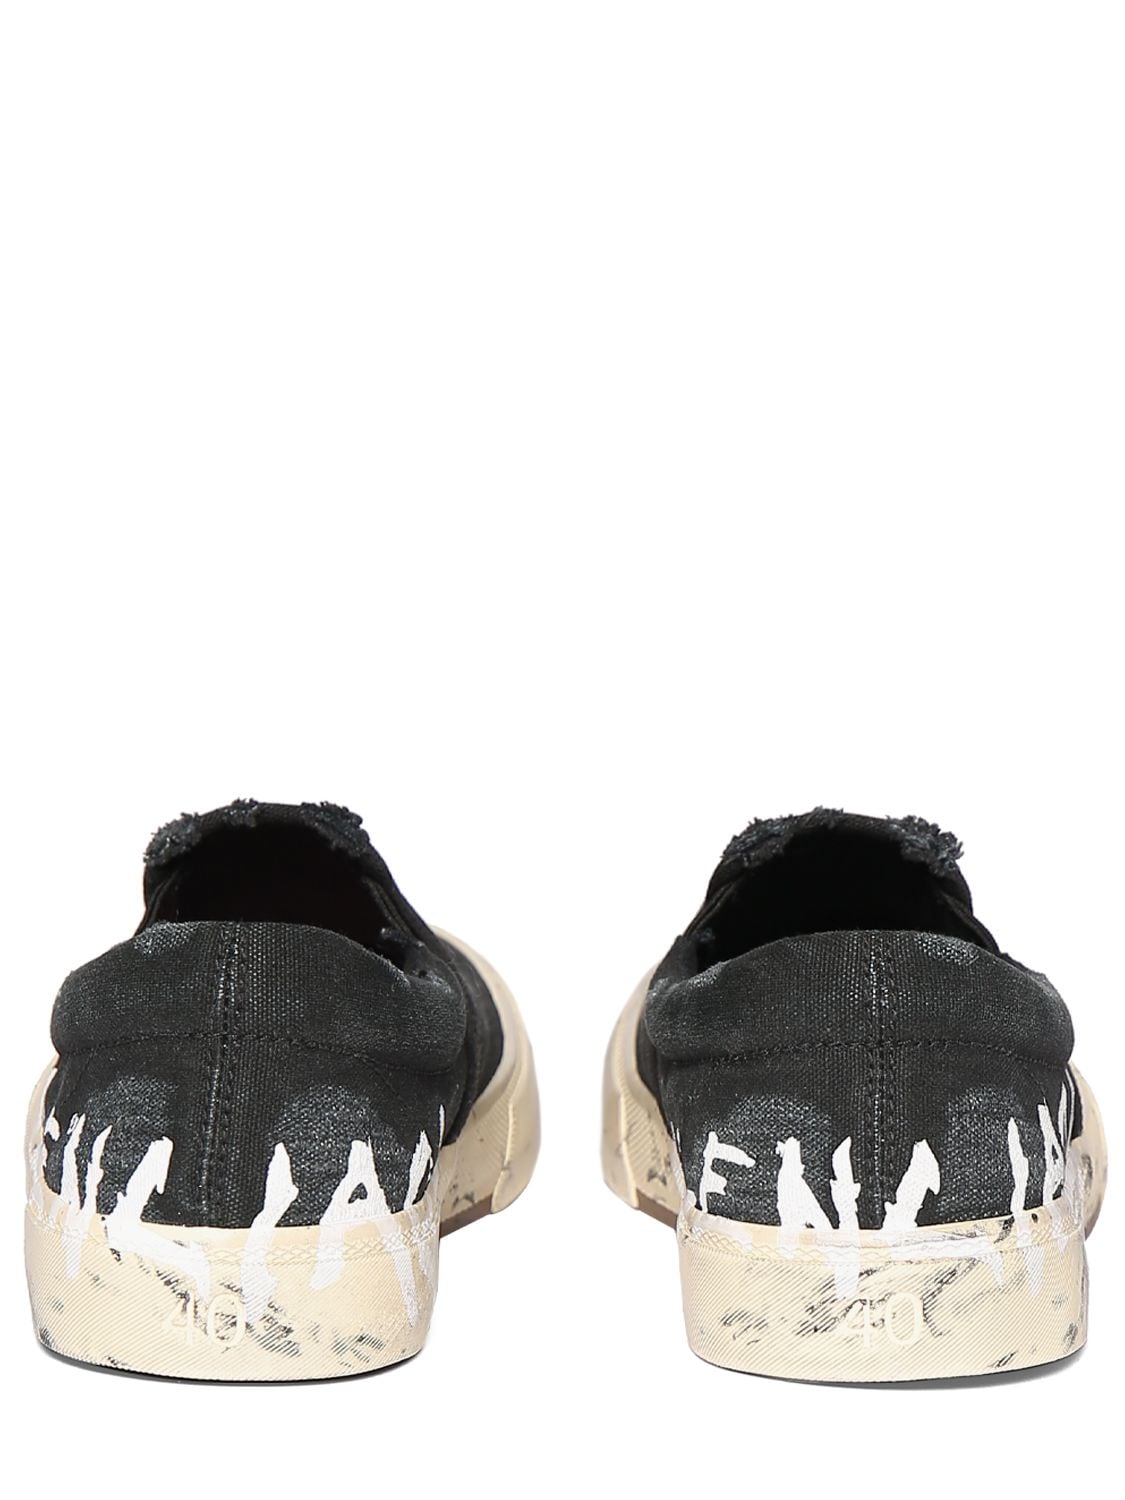 Shop Balenciaga Paris Slip-on Sneakers In Black,white